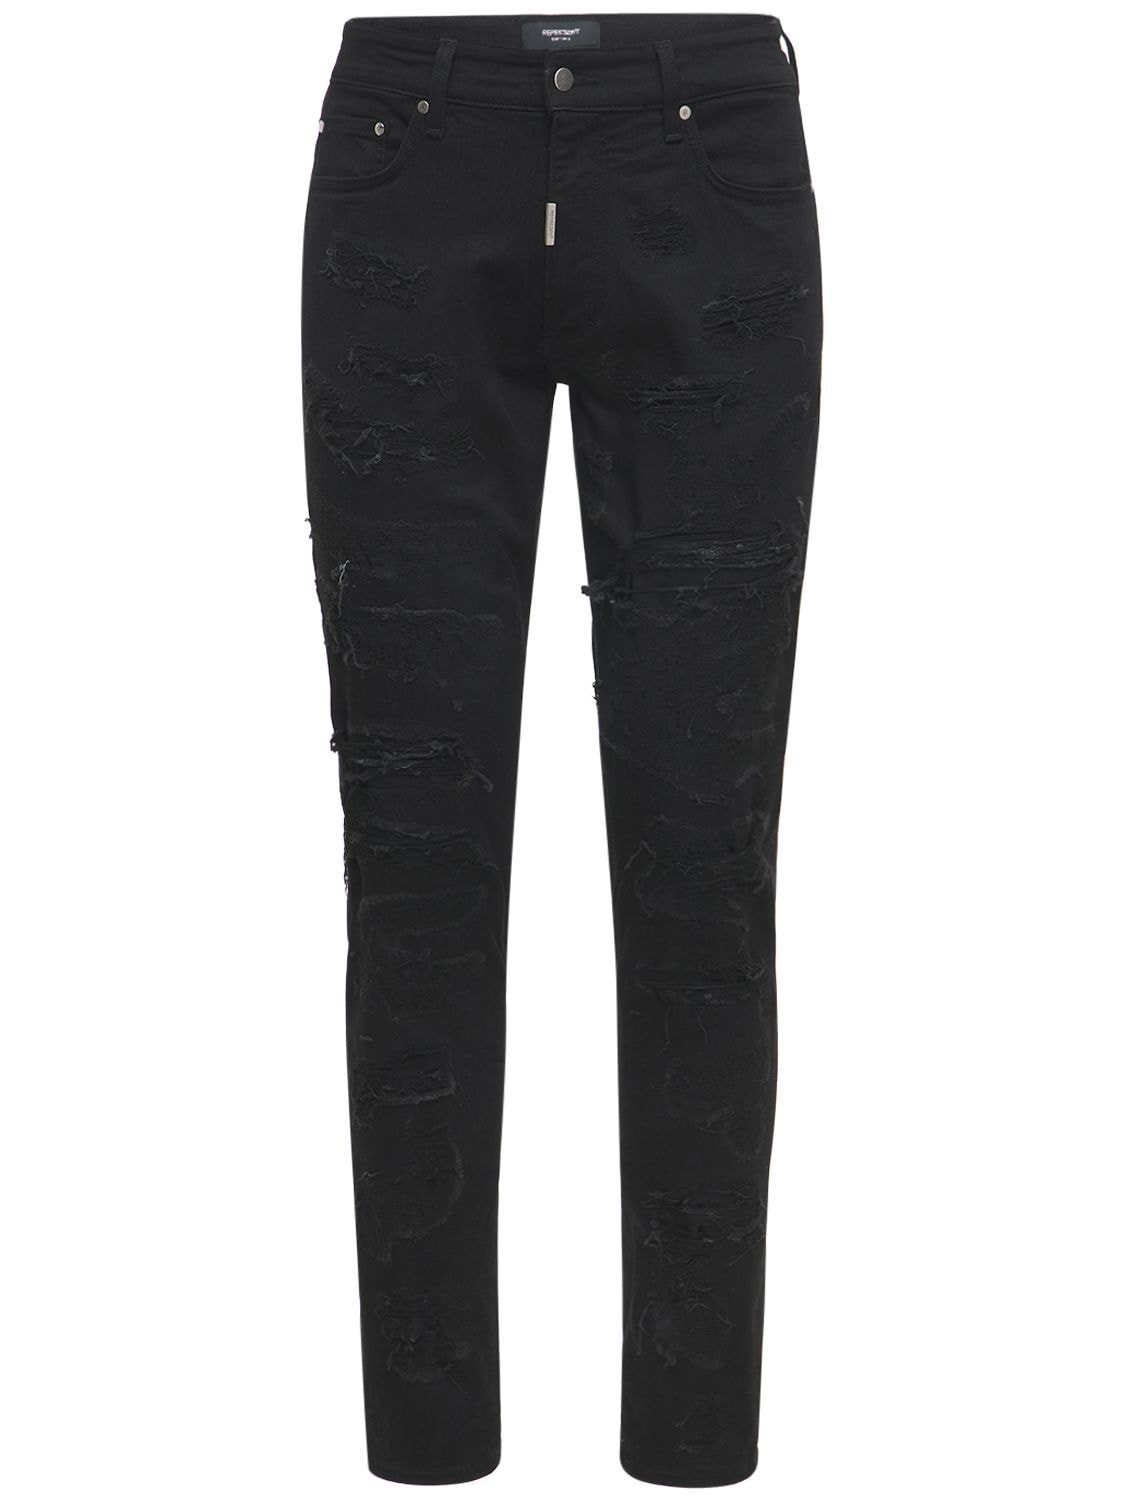 Represent - Shredded cotton blend denim jeans - Black | Luisaviaroma